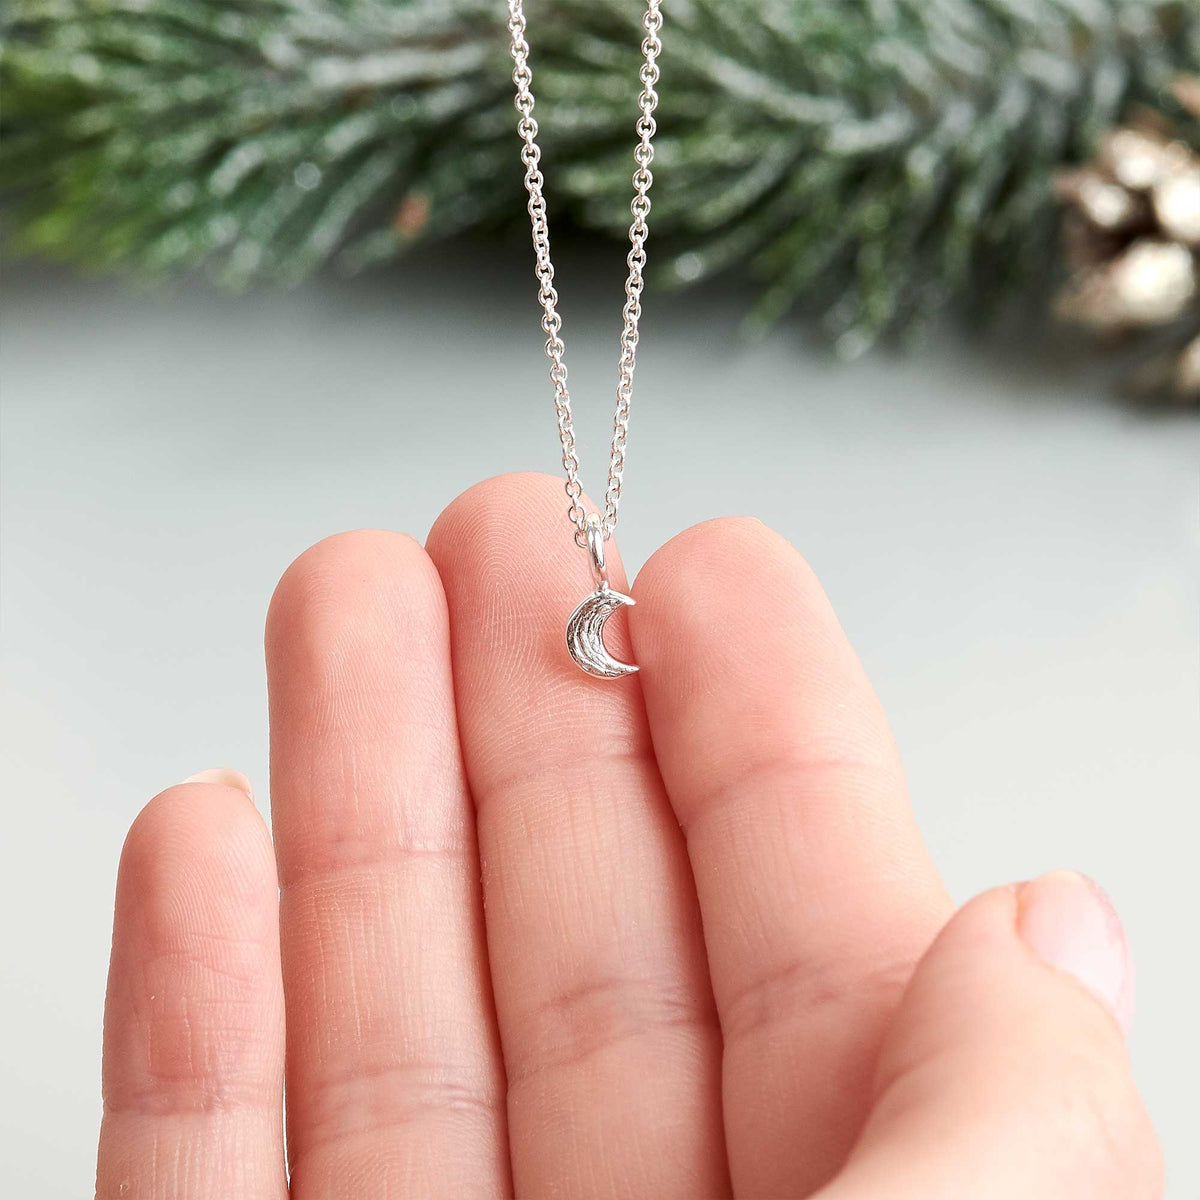 Small silver moon pendant for teens young girls handmade designer Scarlett Jewellery